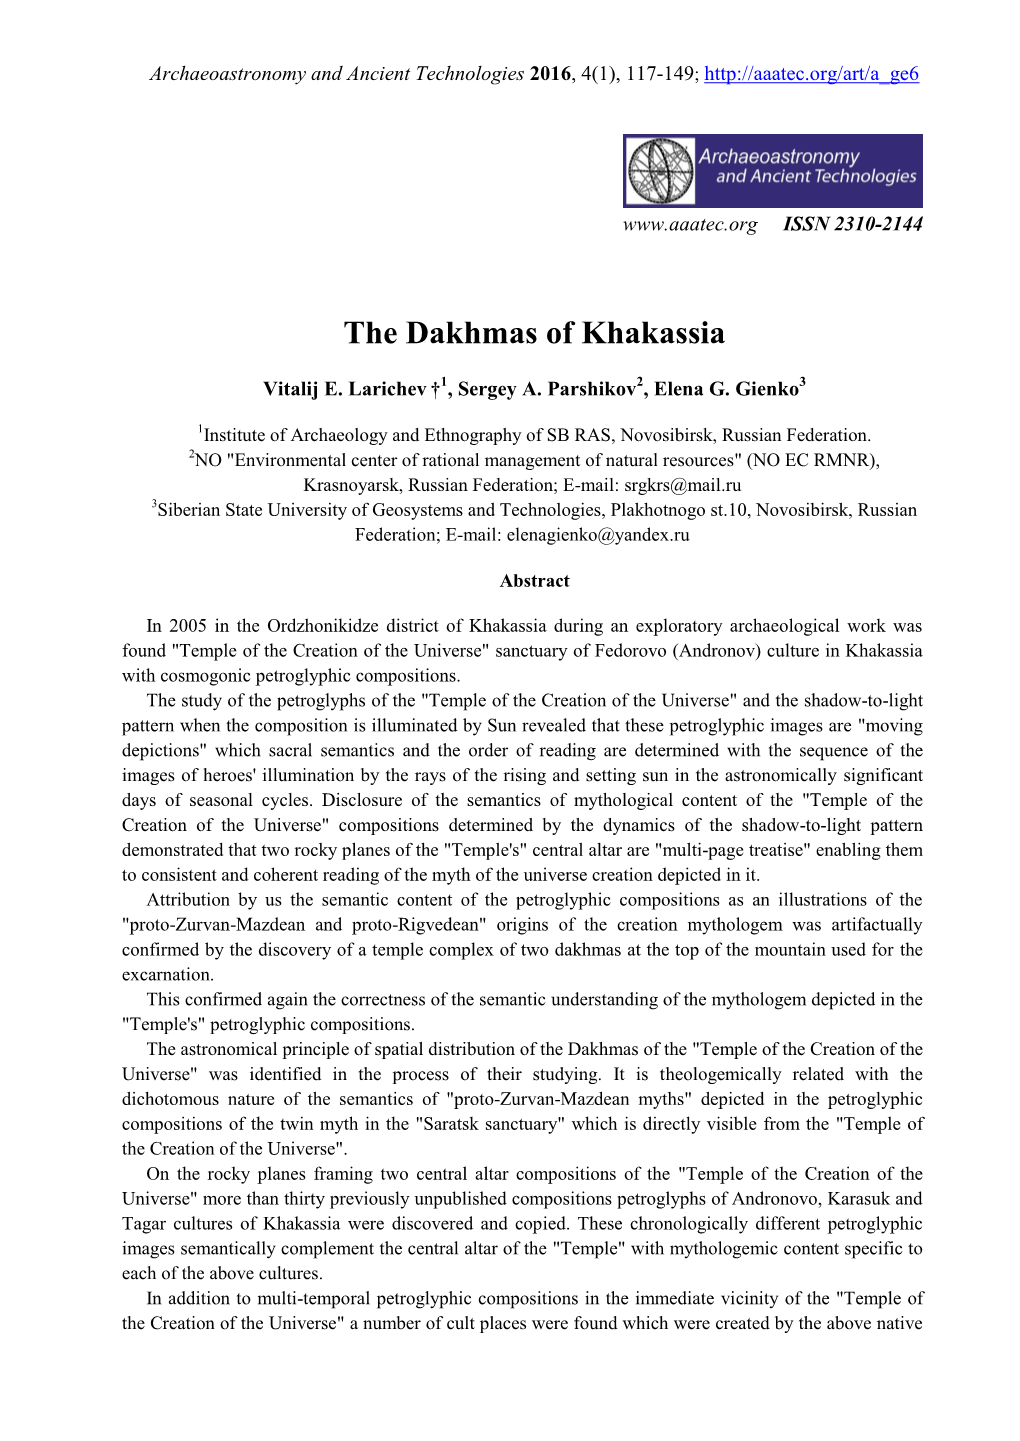 The Dakhmas of Khakassia